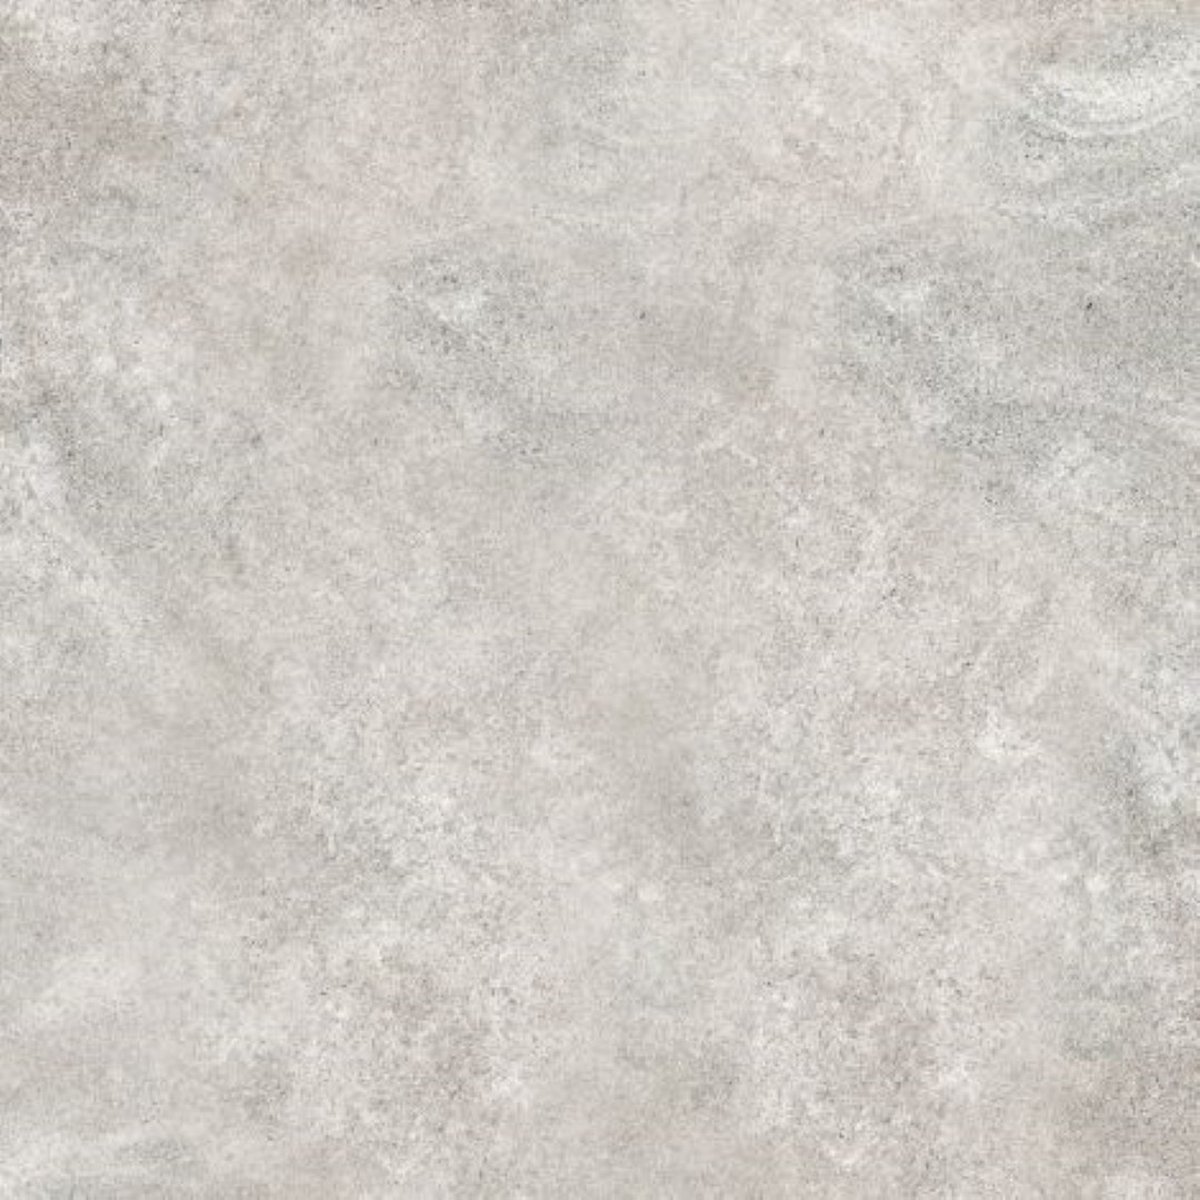 Mixed Stone Soft Grey keramische tegels ceramica terrazza 60x60x2 c...